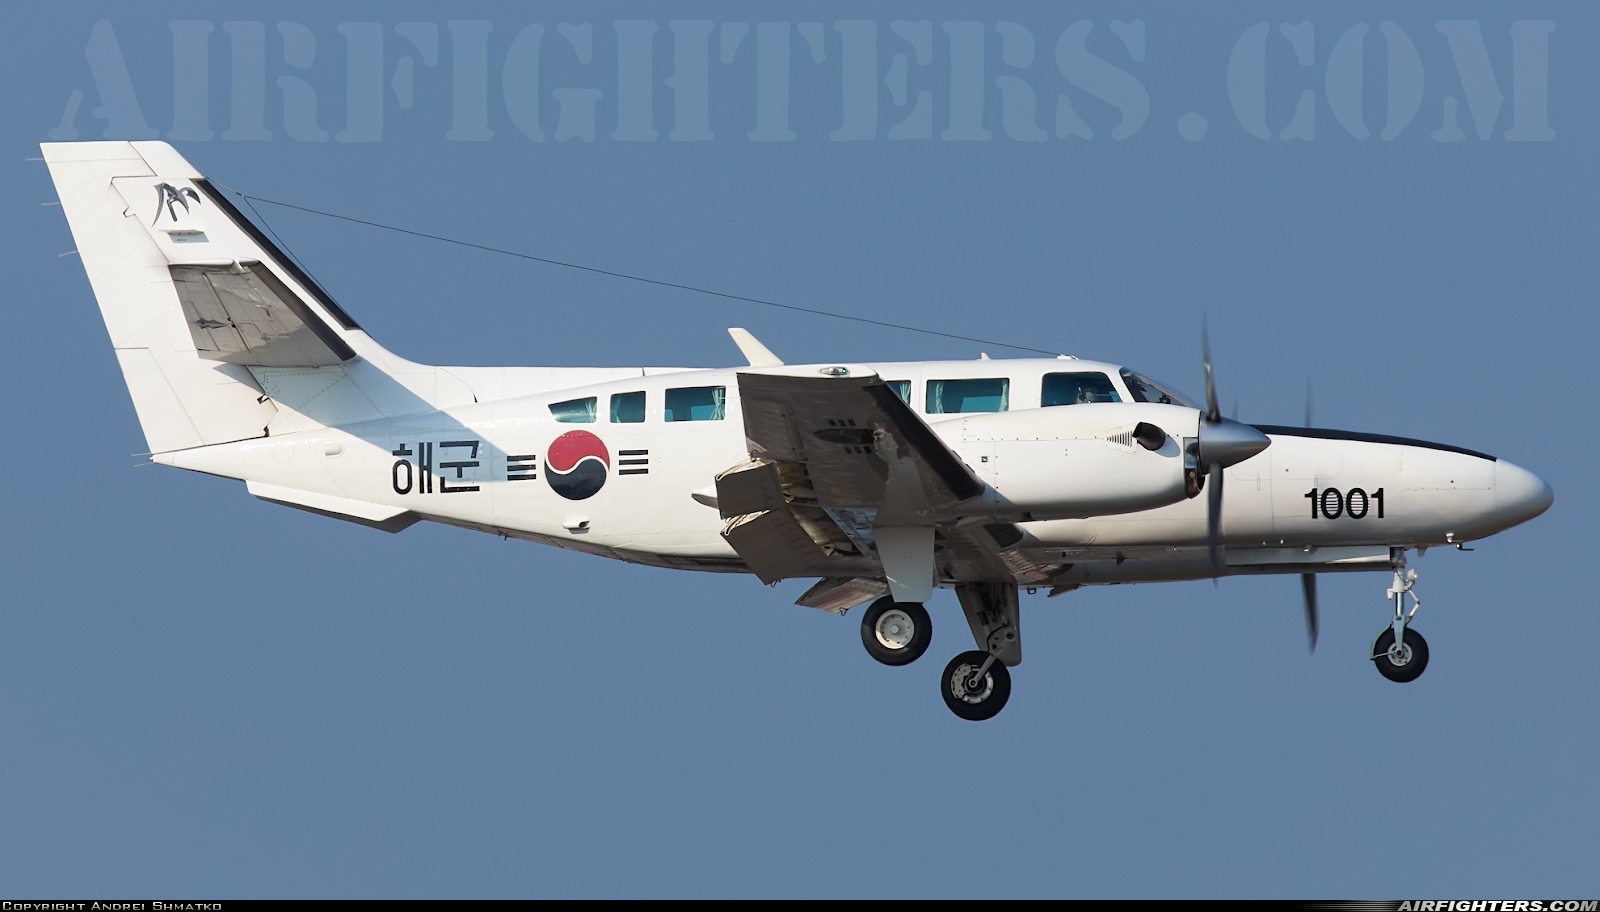 South Korea - Navy Reims-Cessna F-406 Caravan II 981001 at Withheld, South Korea